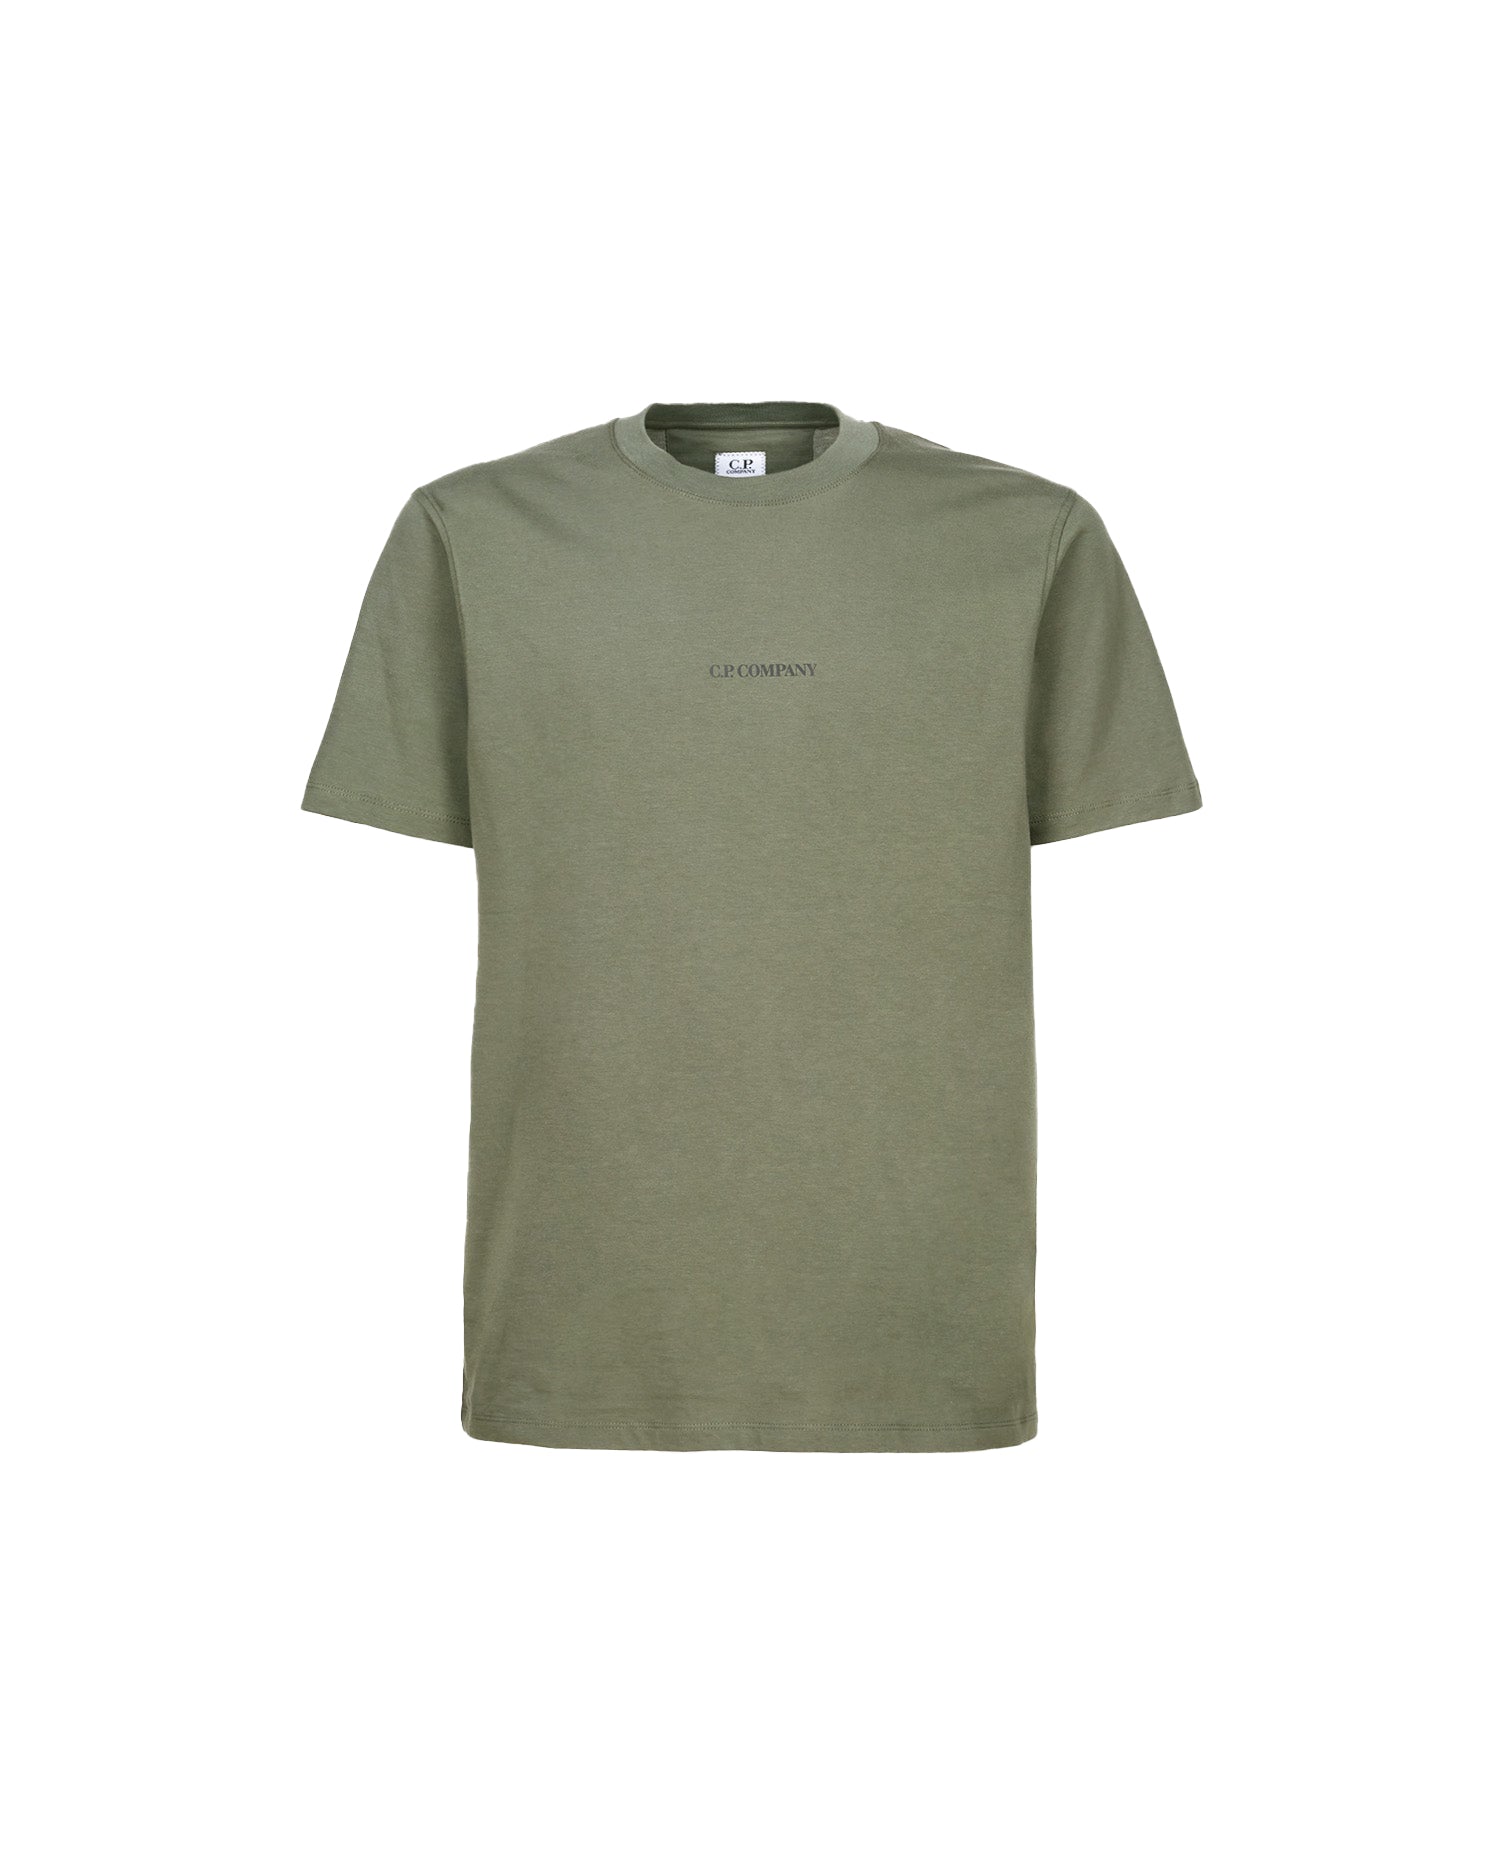 C.P. Company 30/1 Jersey Compact Logo T-Shirt - 669 Thyme Green - Escape Menswear